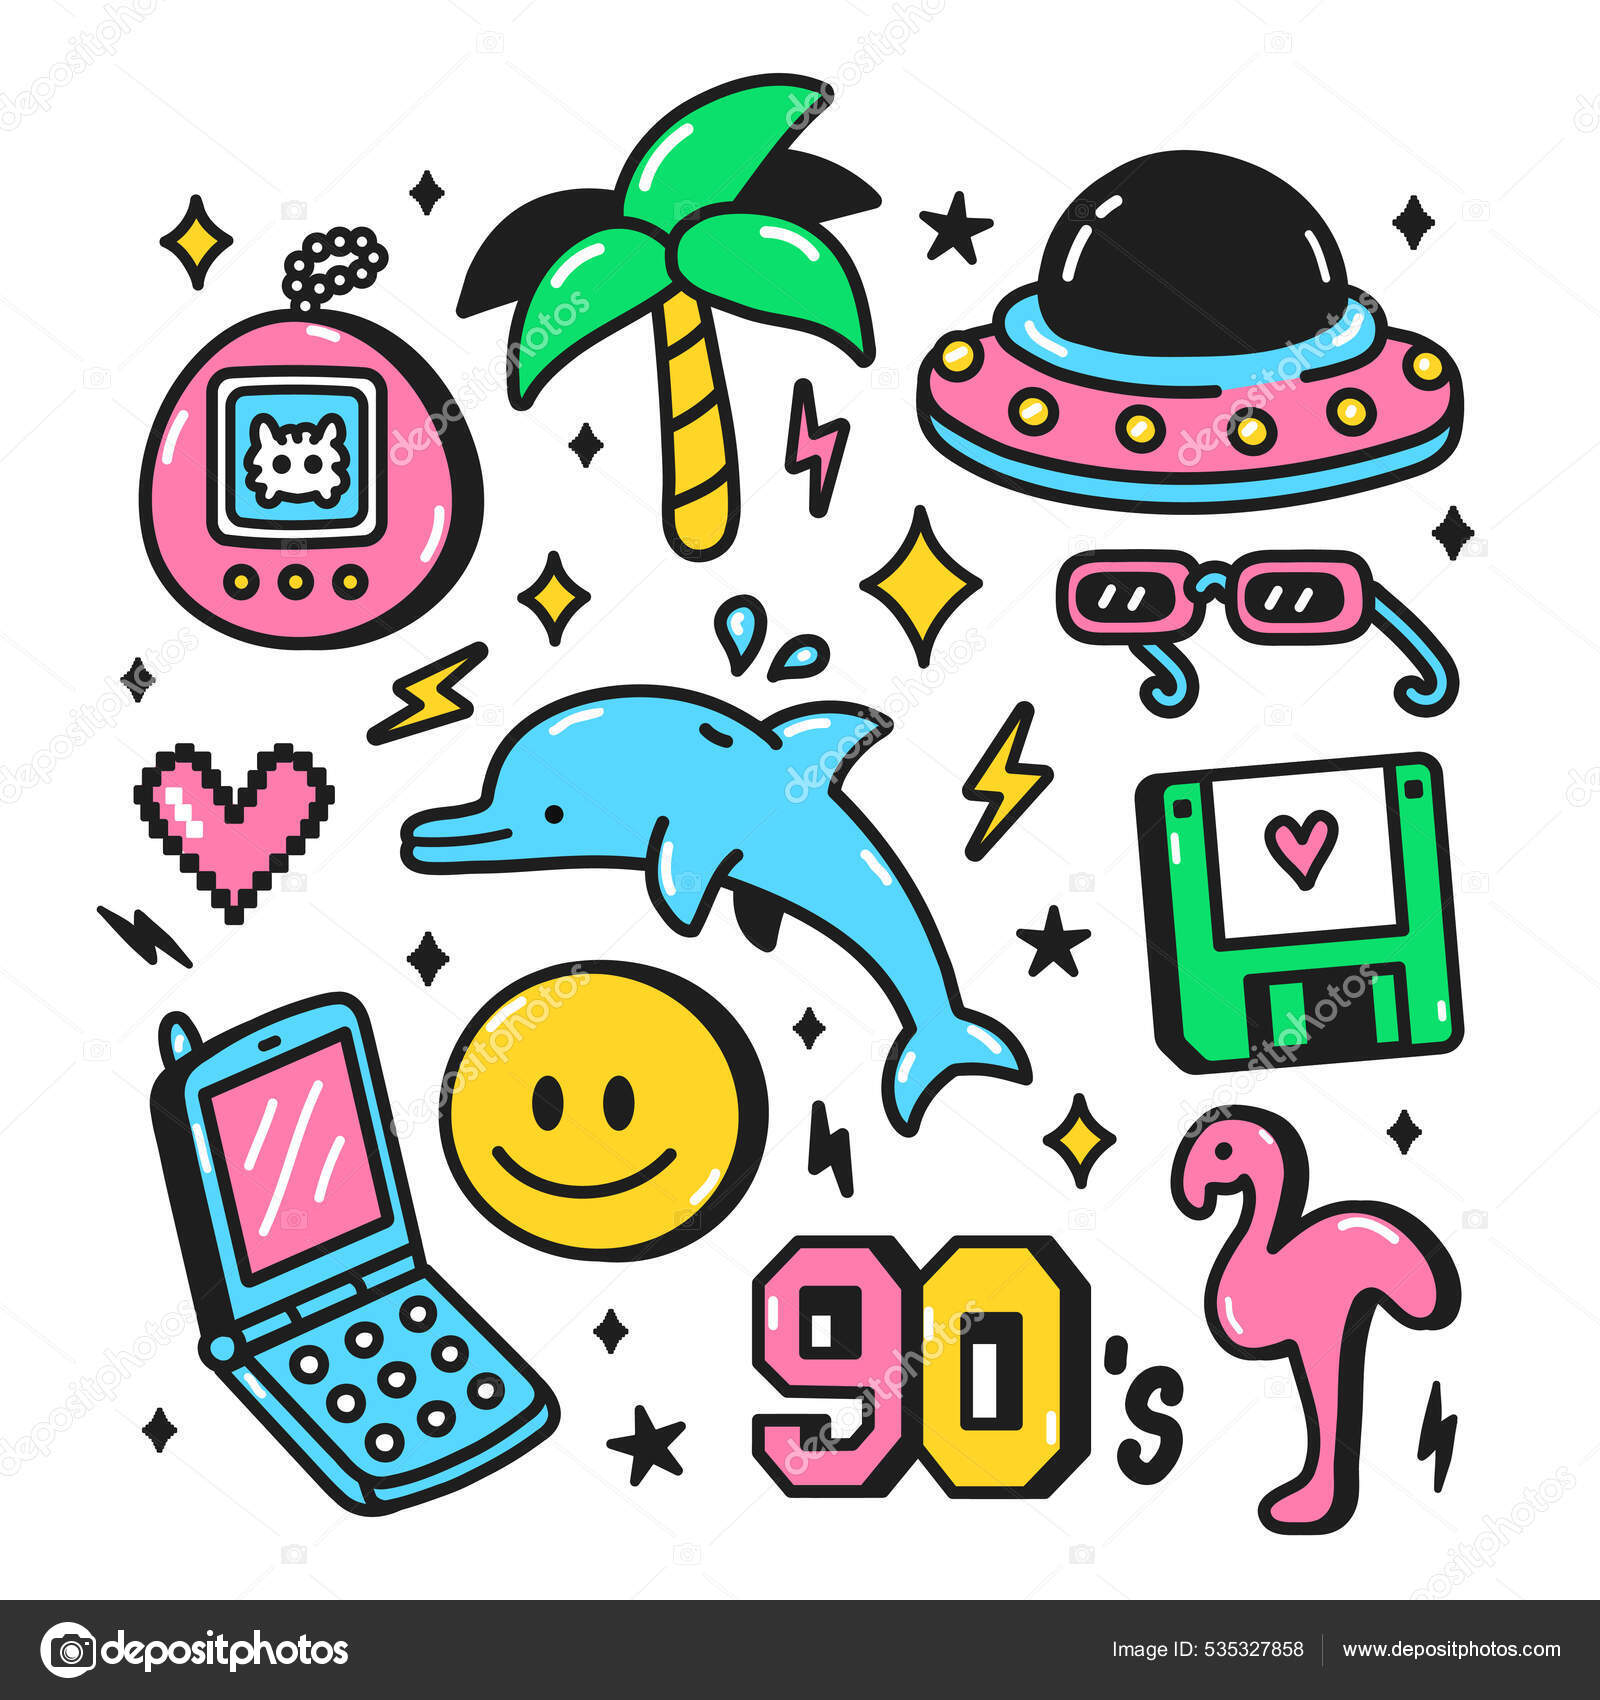 90s retro vintage teen style stickers set. Vector cartoon doodle